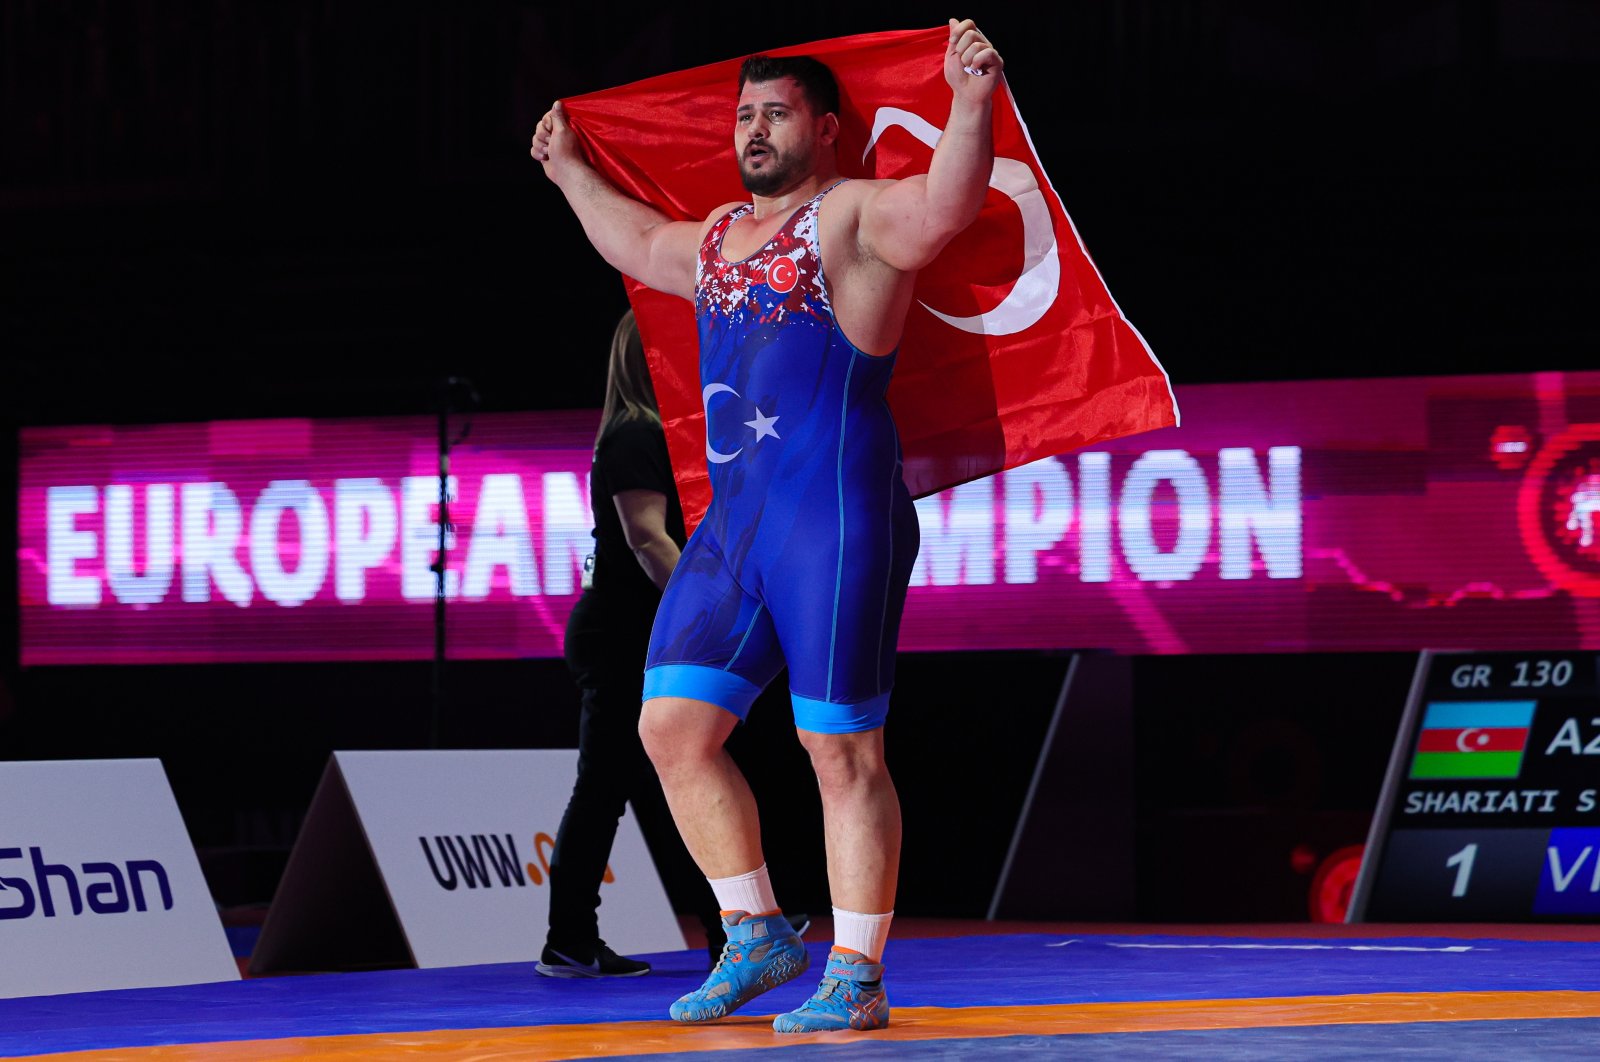 2022 world wrestling championships – men's greco roman 130 kg